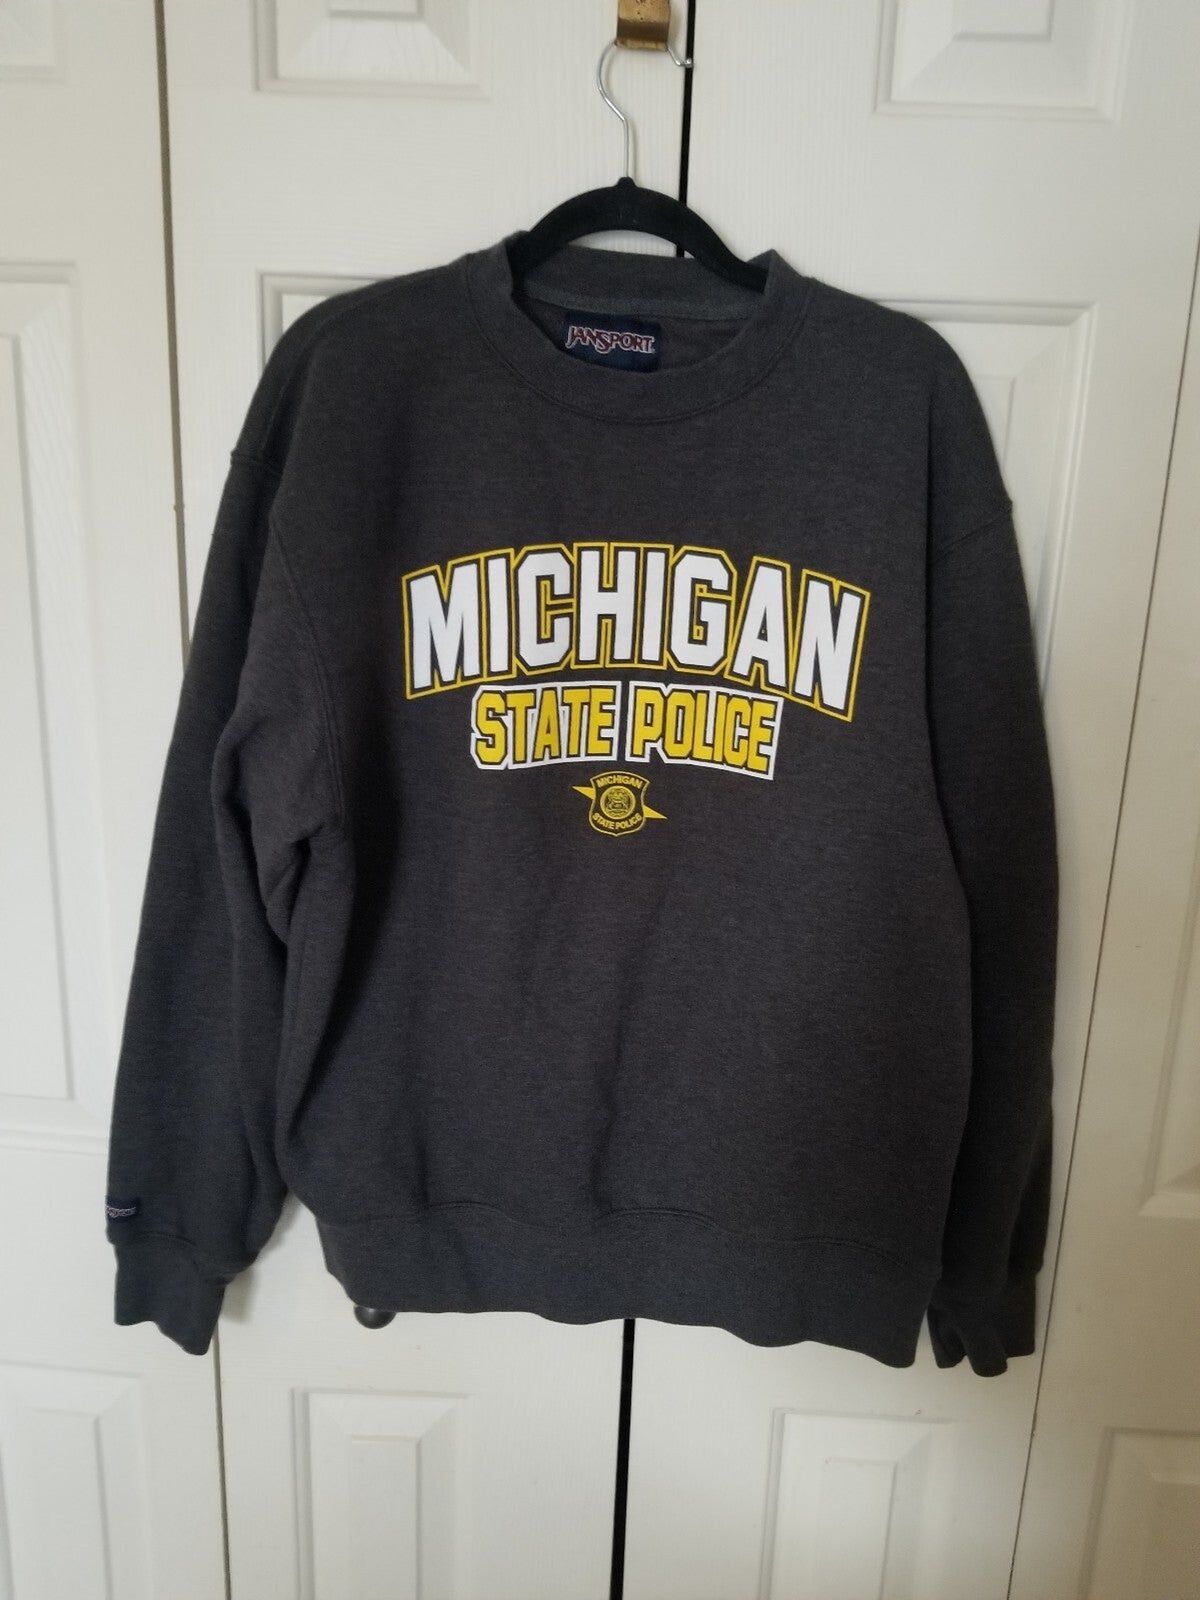 Jansport Michigan State Police crewneck sweatshirt gray grey M